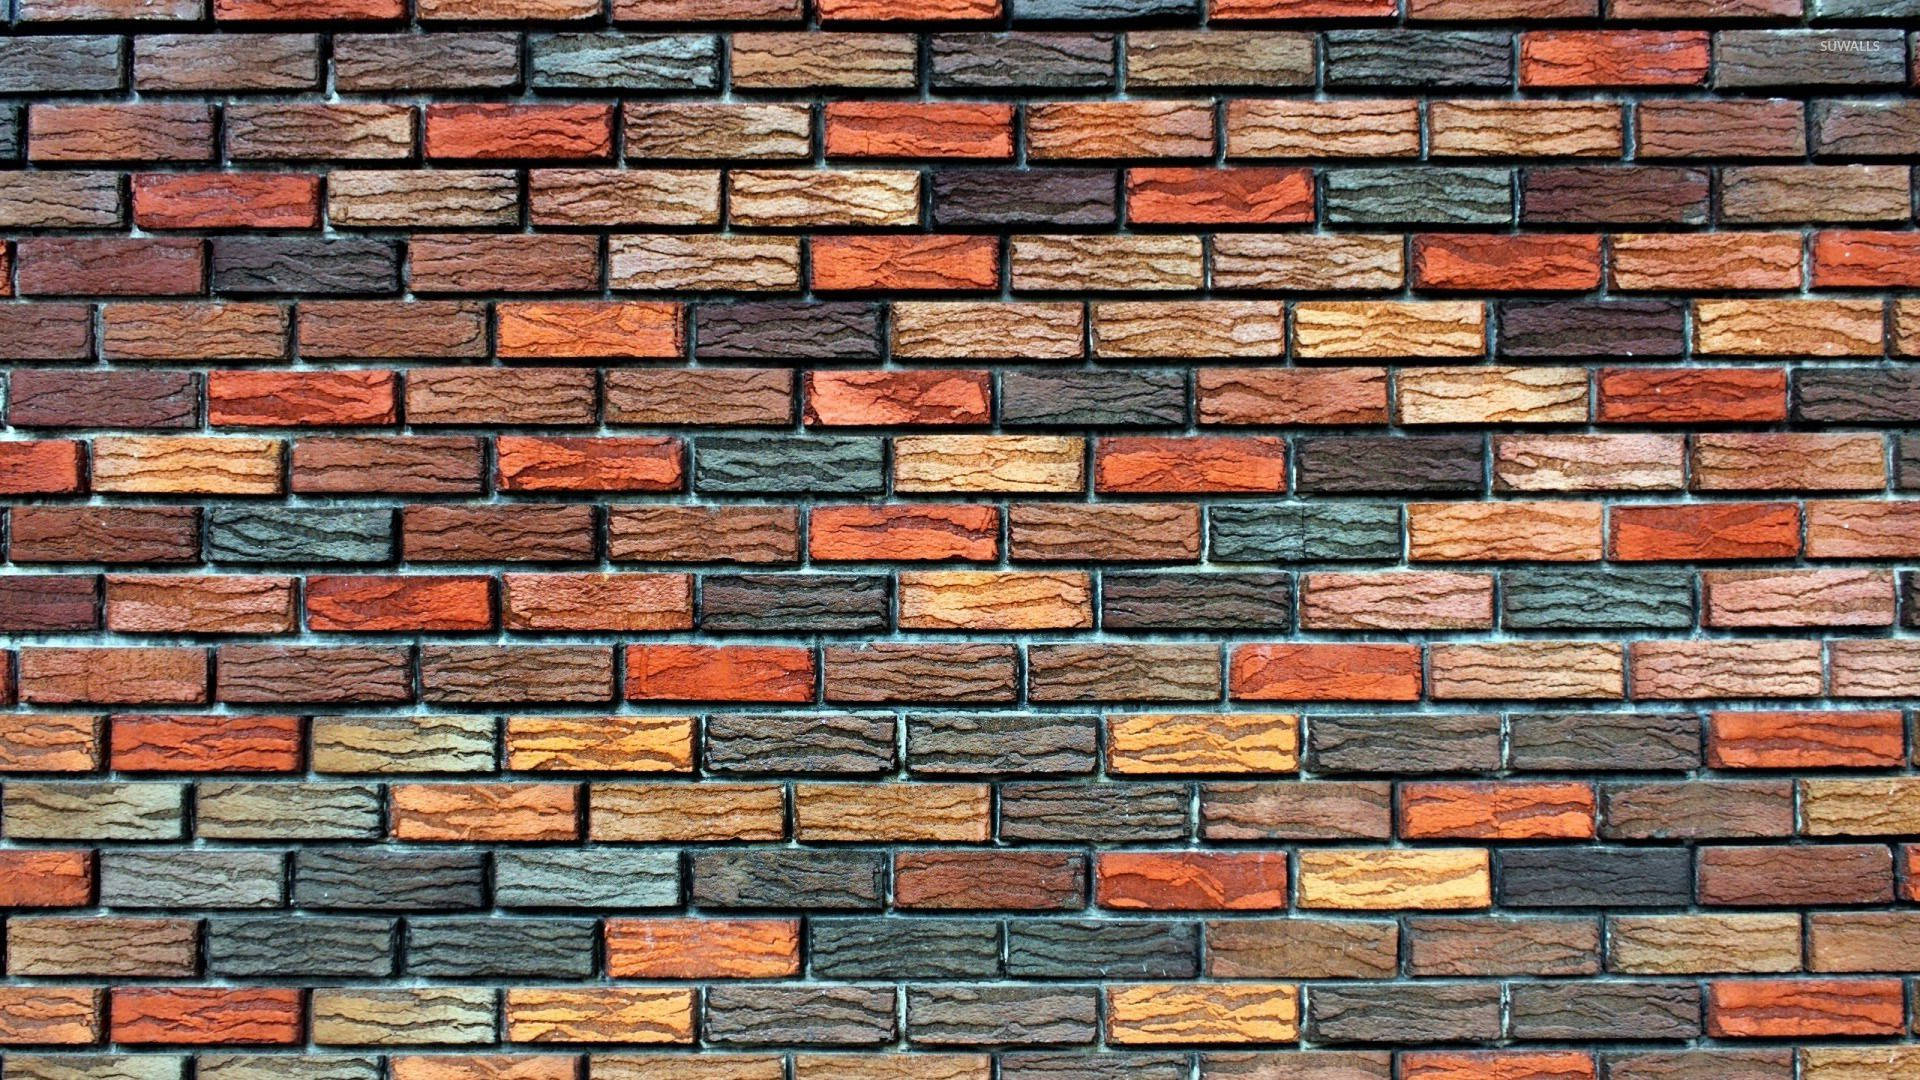 Top 999+ Brick Wallpaper Full HD, 4K Free to Use